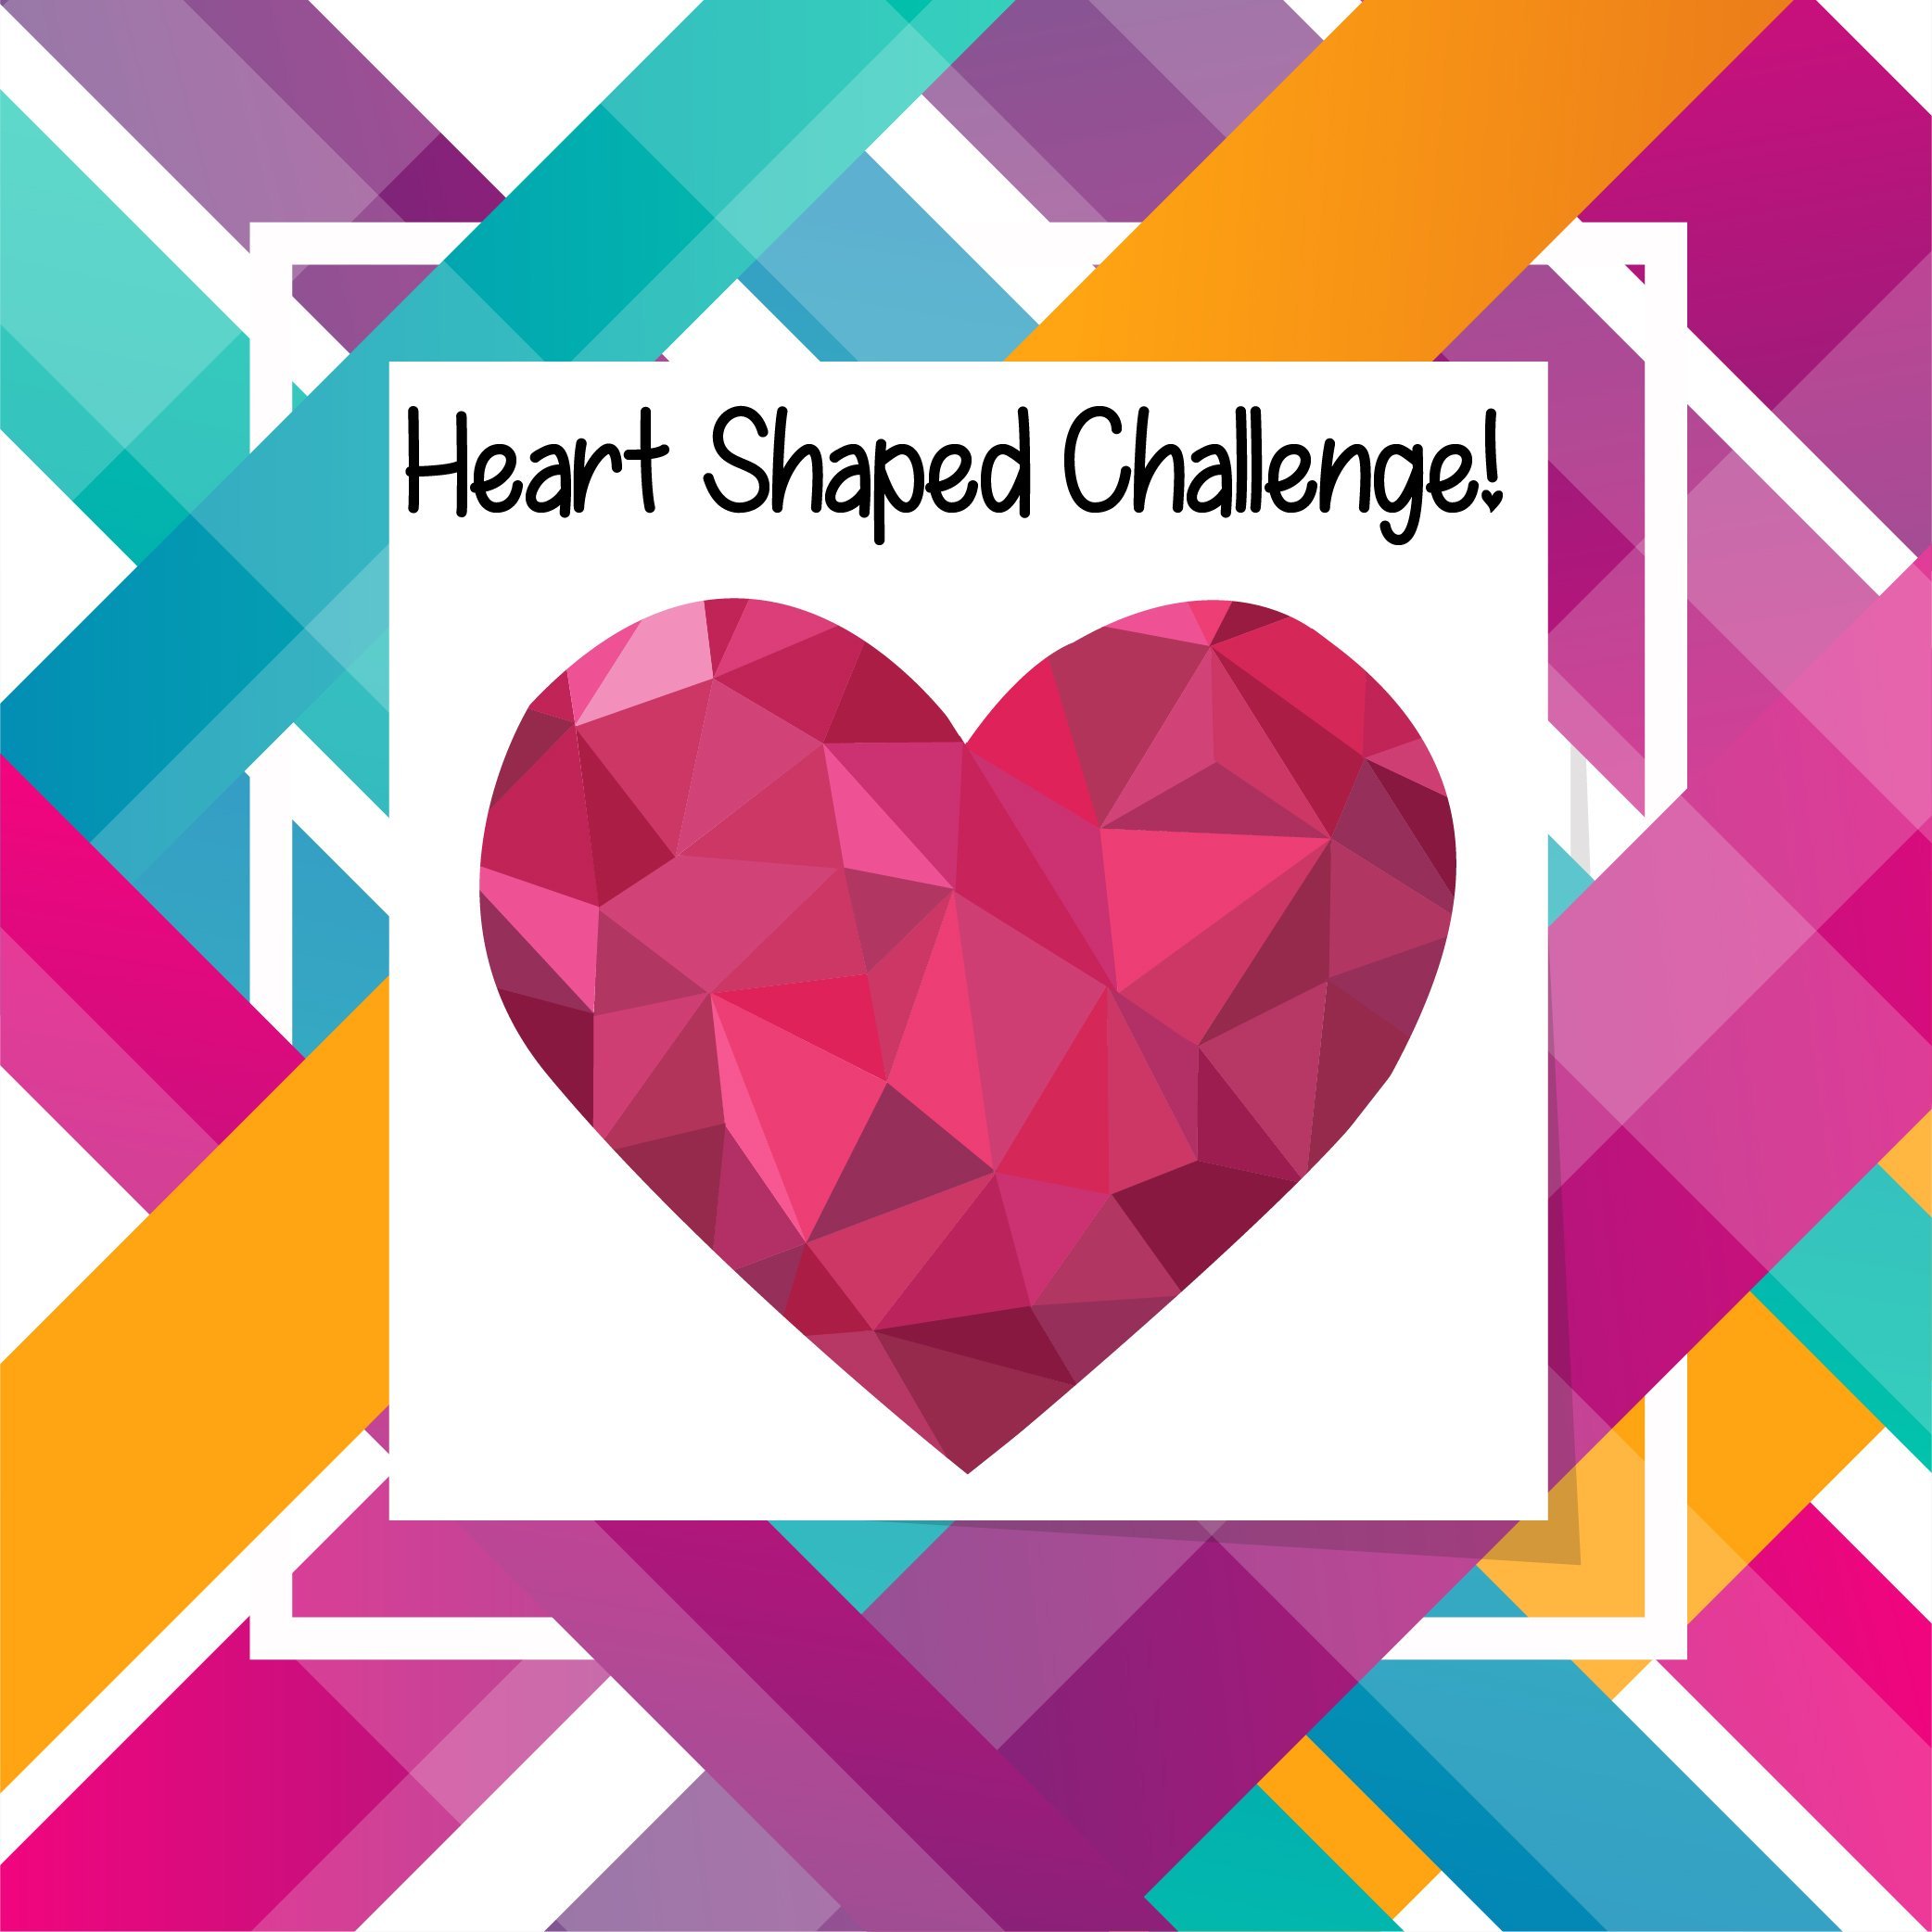 Heart Shaped Challenge!